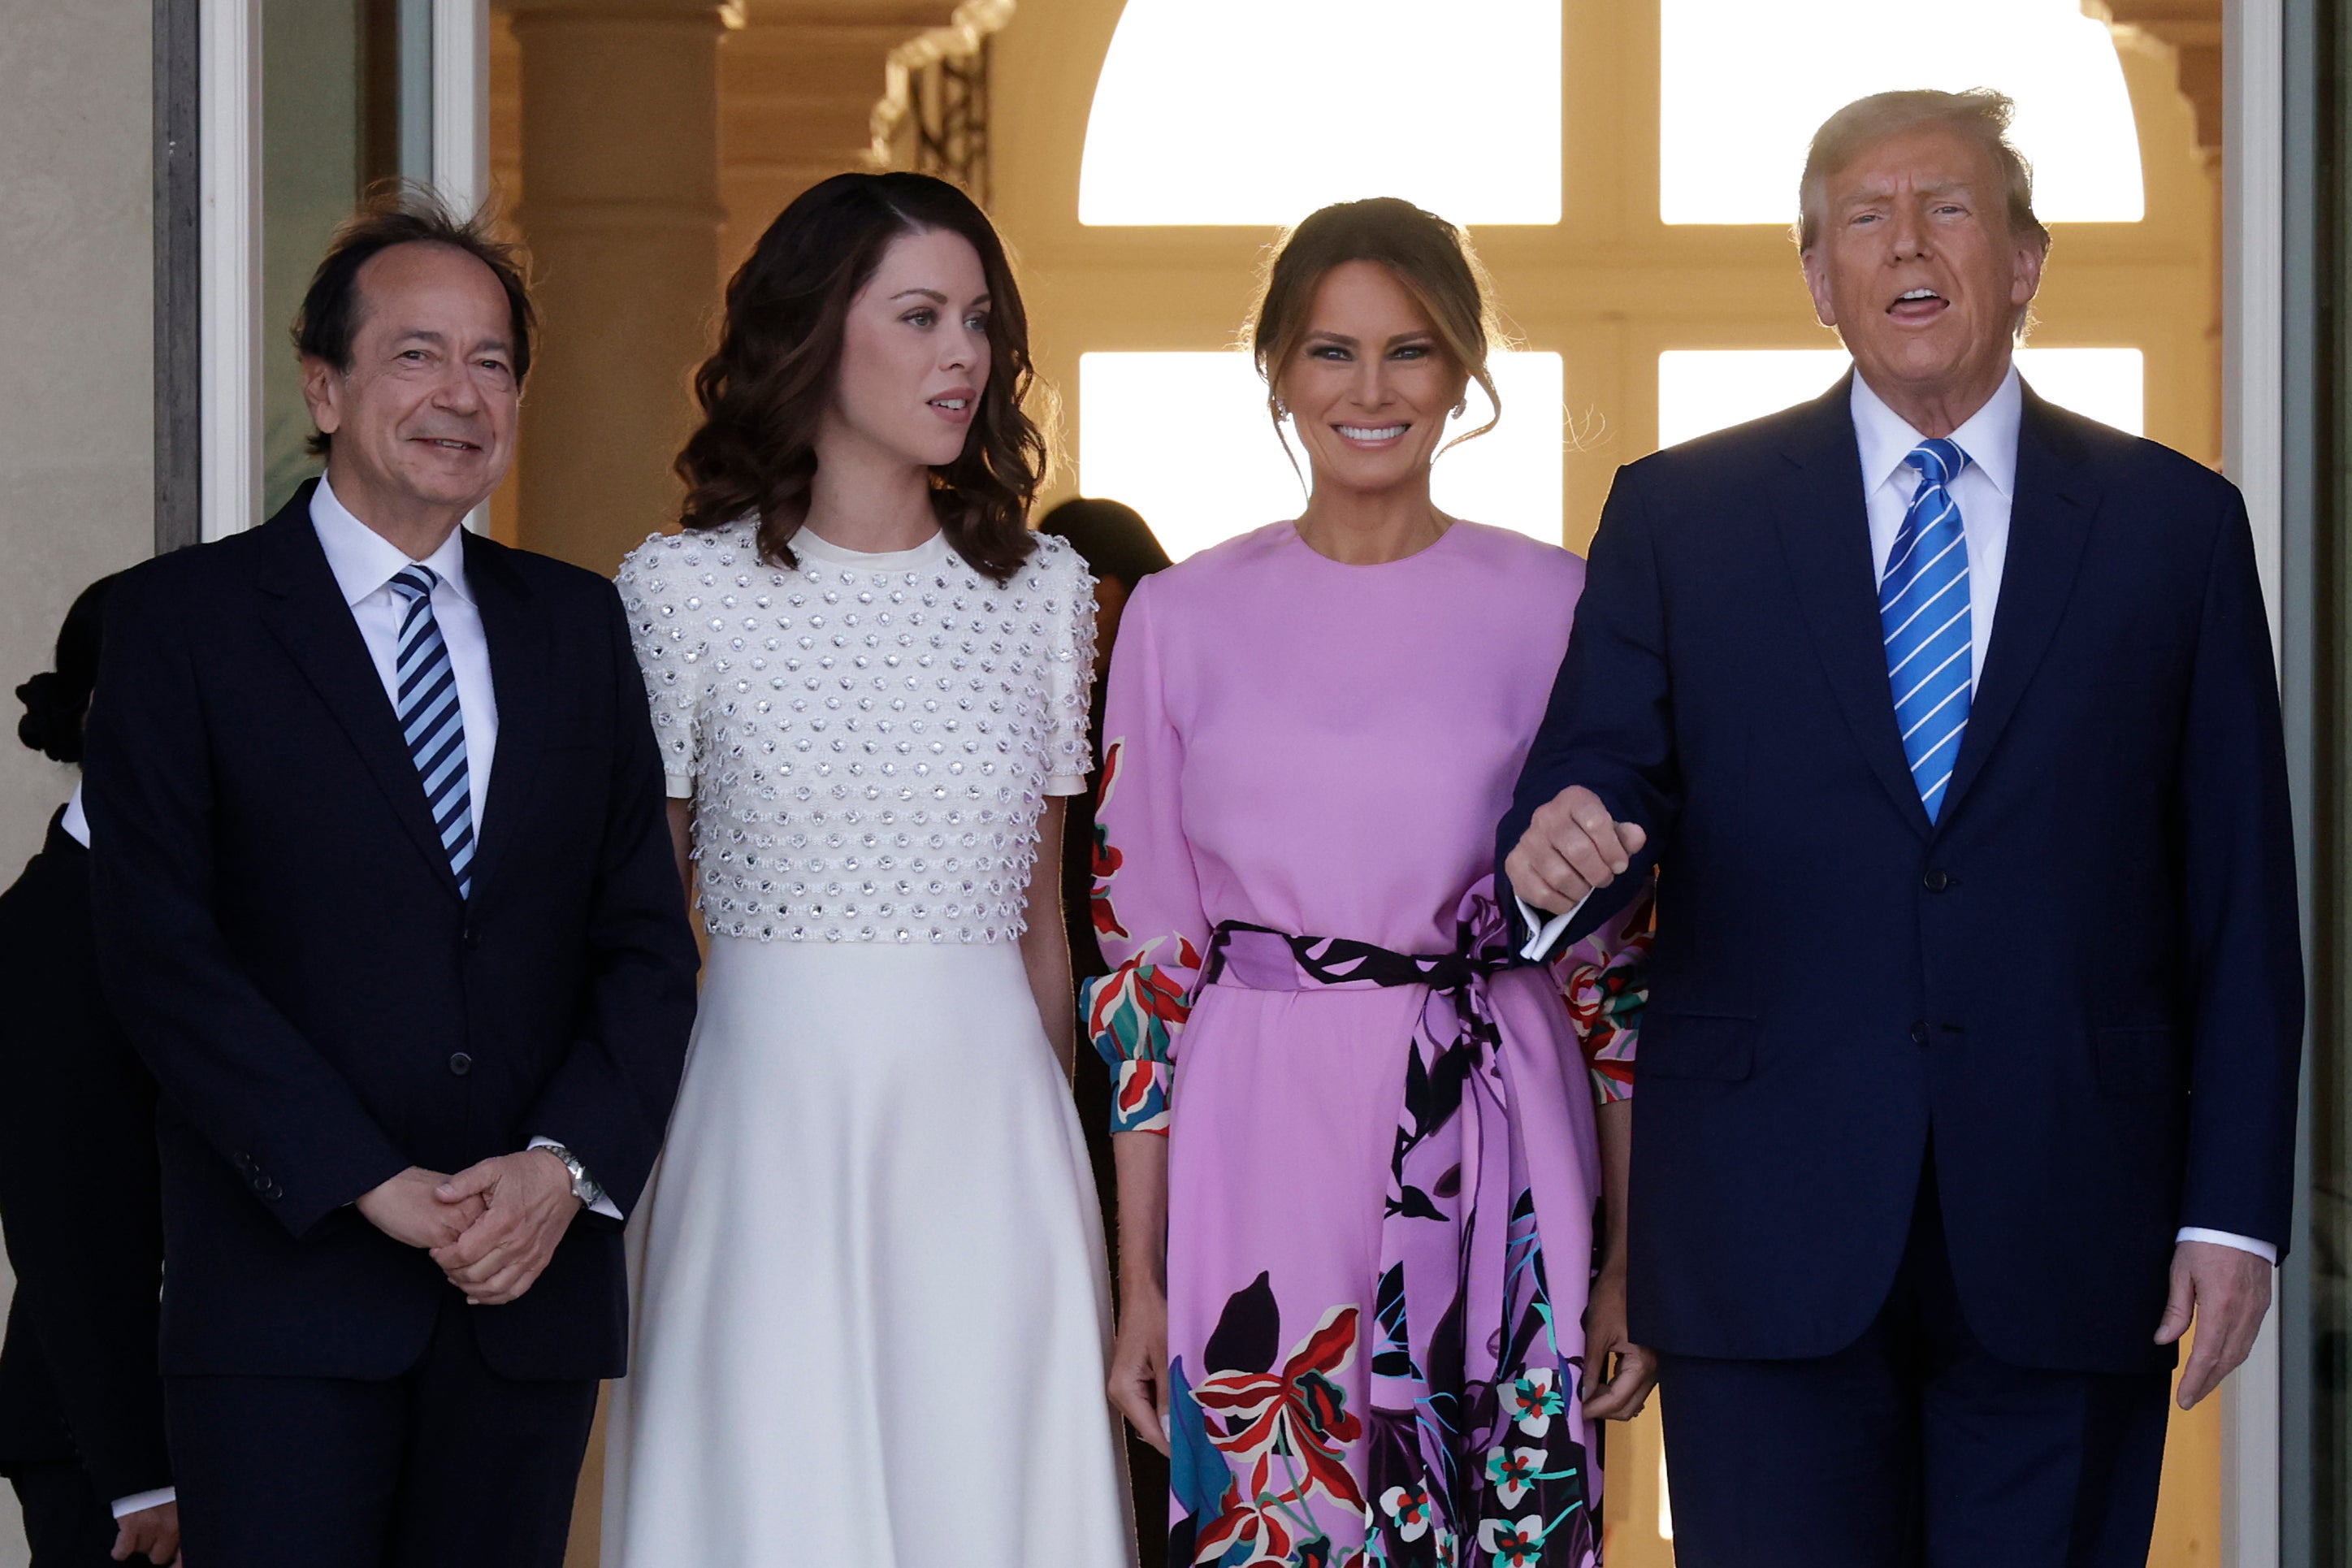 John Paulson, Alina de Almeida, Melania Trump, and Donald Trump gather for a fundraiser for the Trump campaign on 6 April, 2024